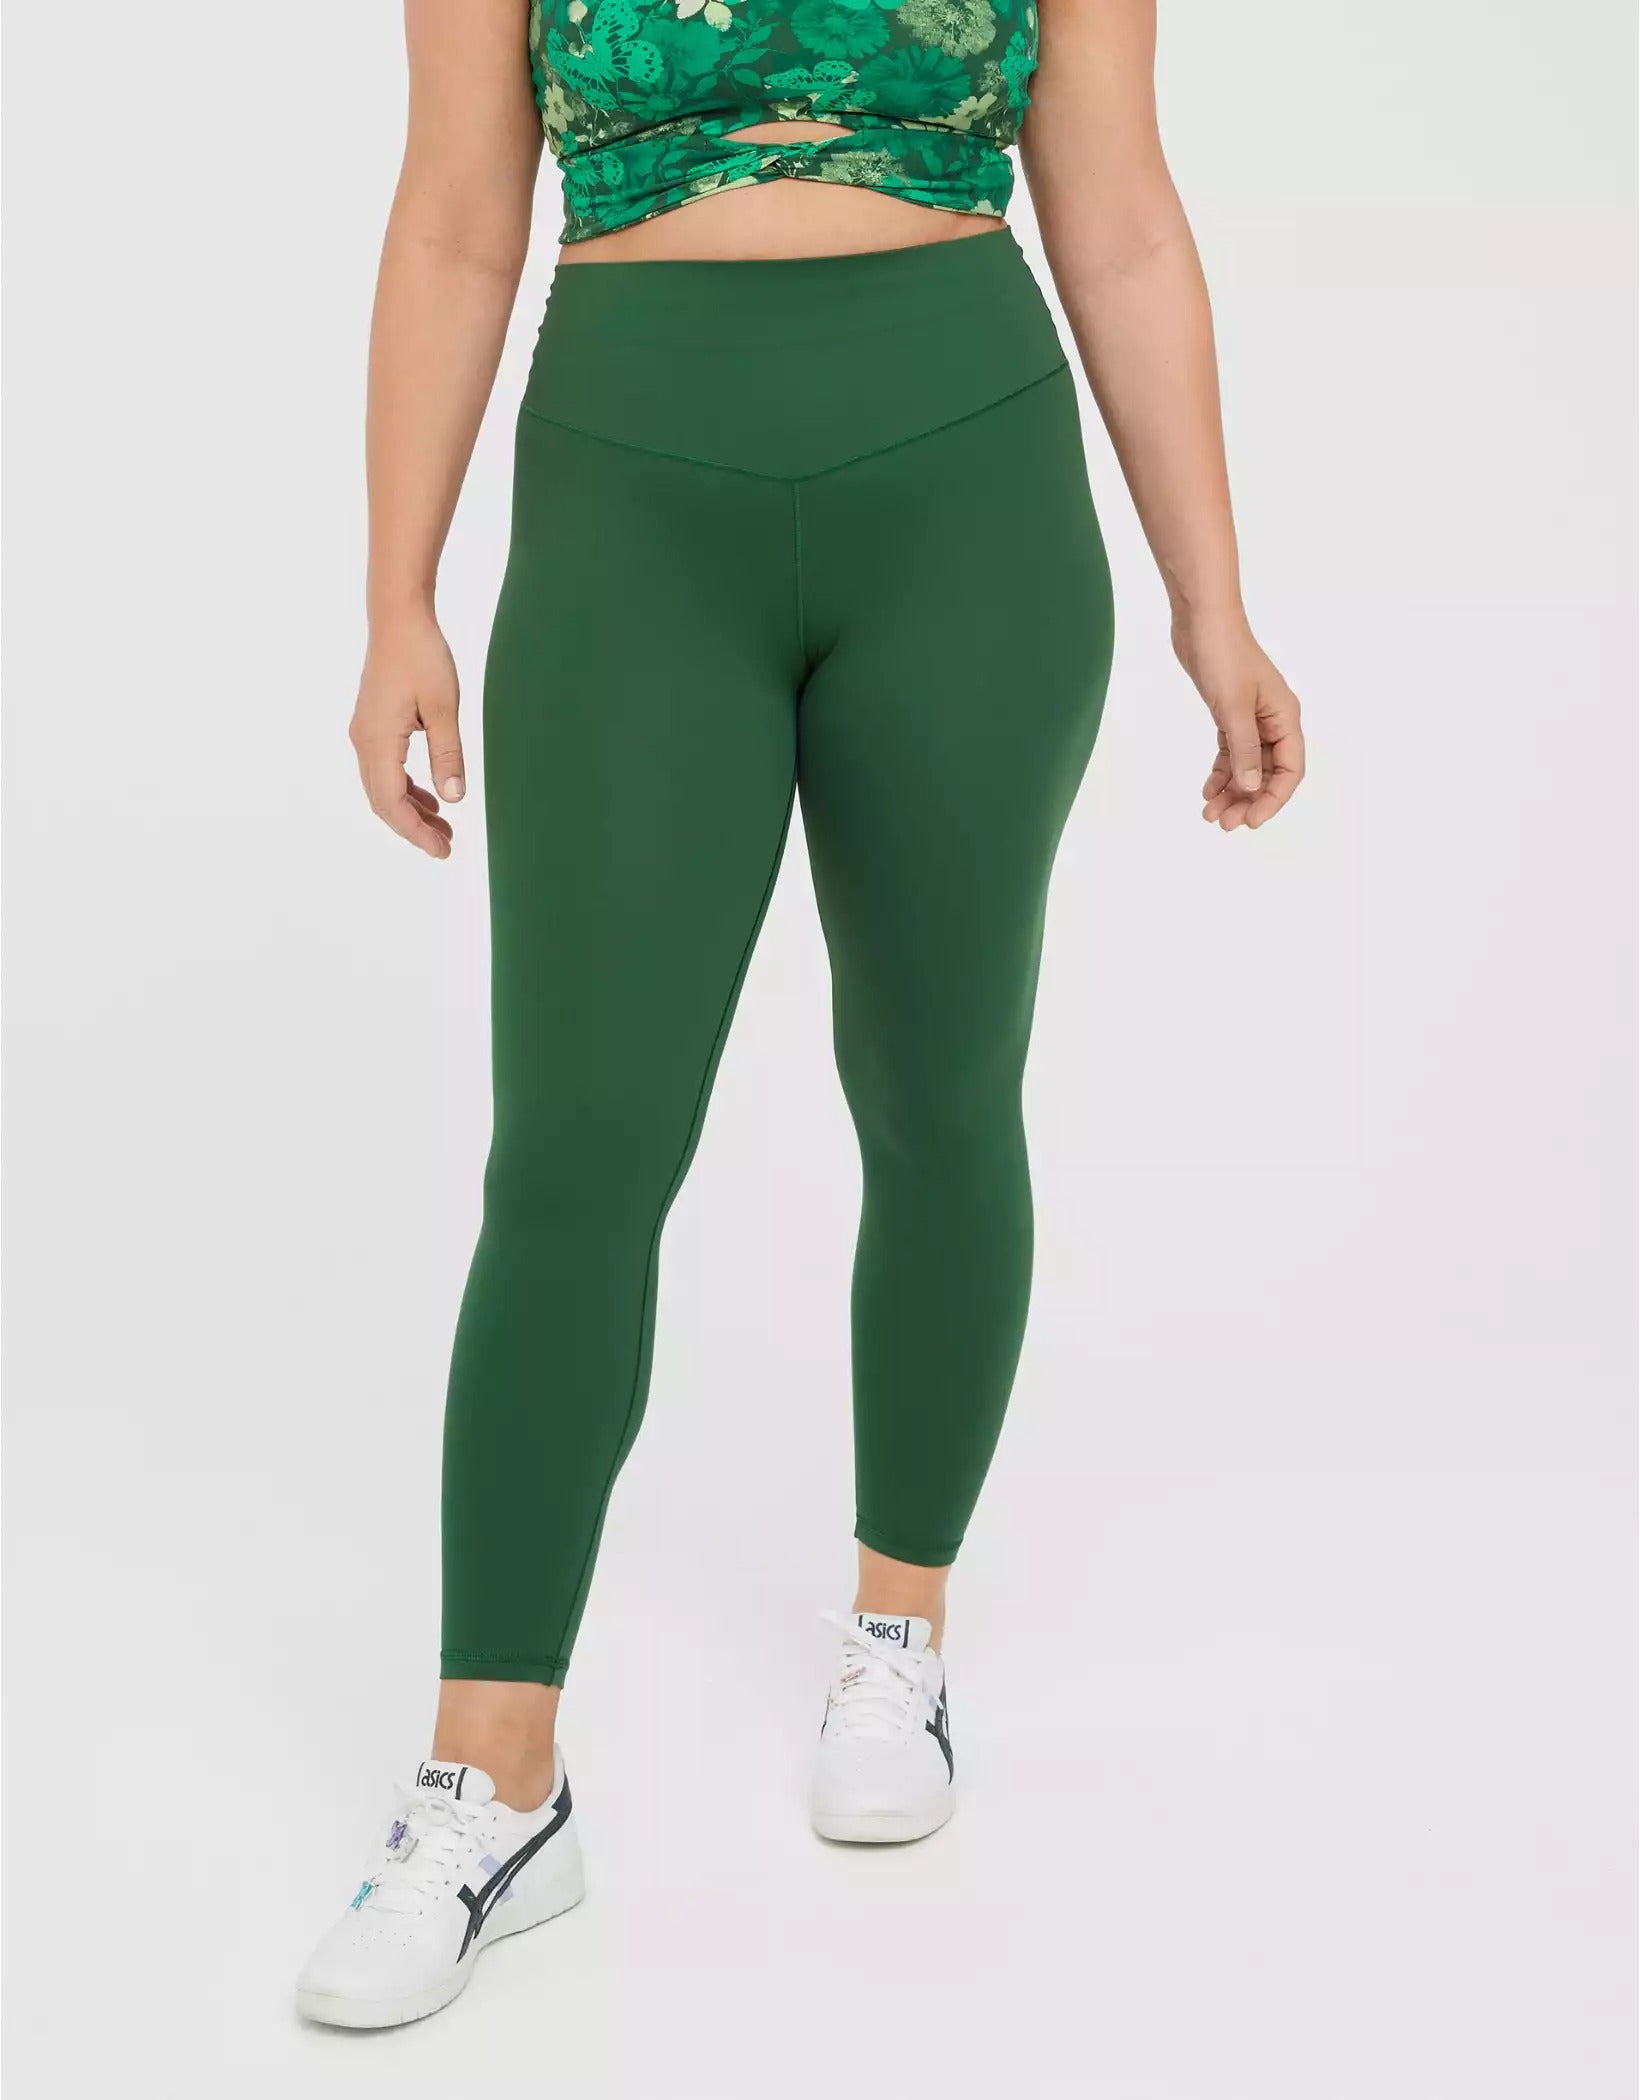 Leggings Yoga Sets Women High Waist Plus Size Suits Gym Sports Leggings  Pants Workout Activewear Black Top XL (Rainbow Green Large)